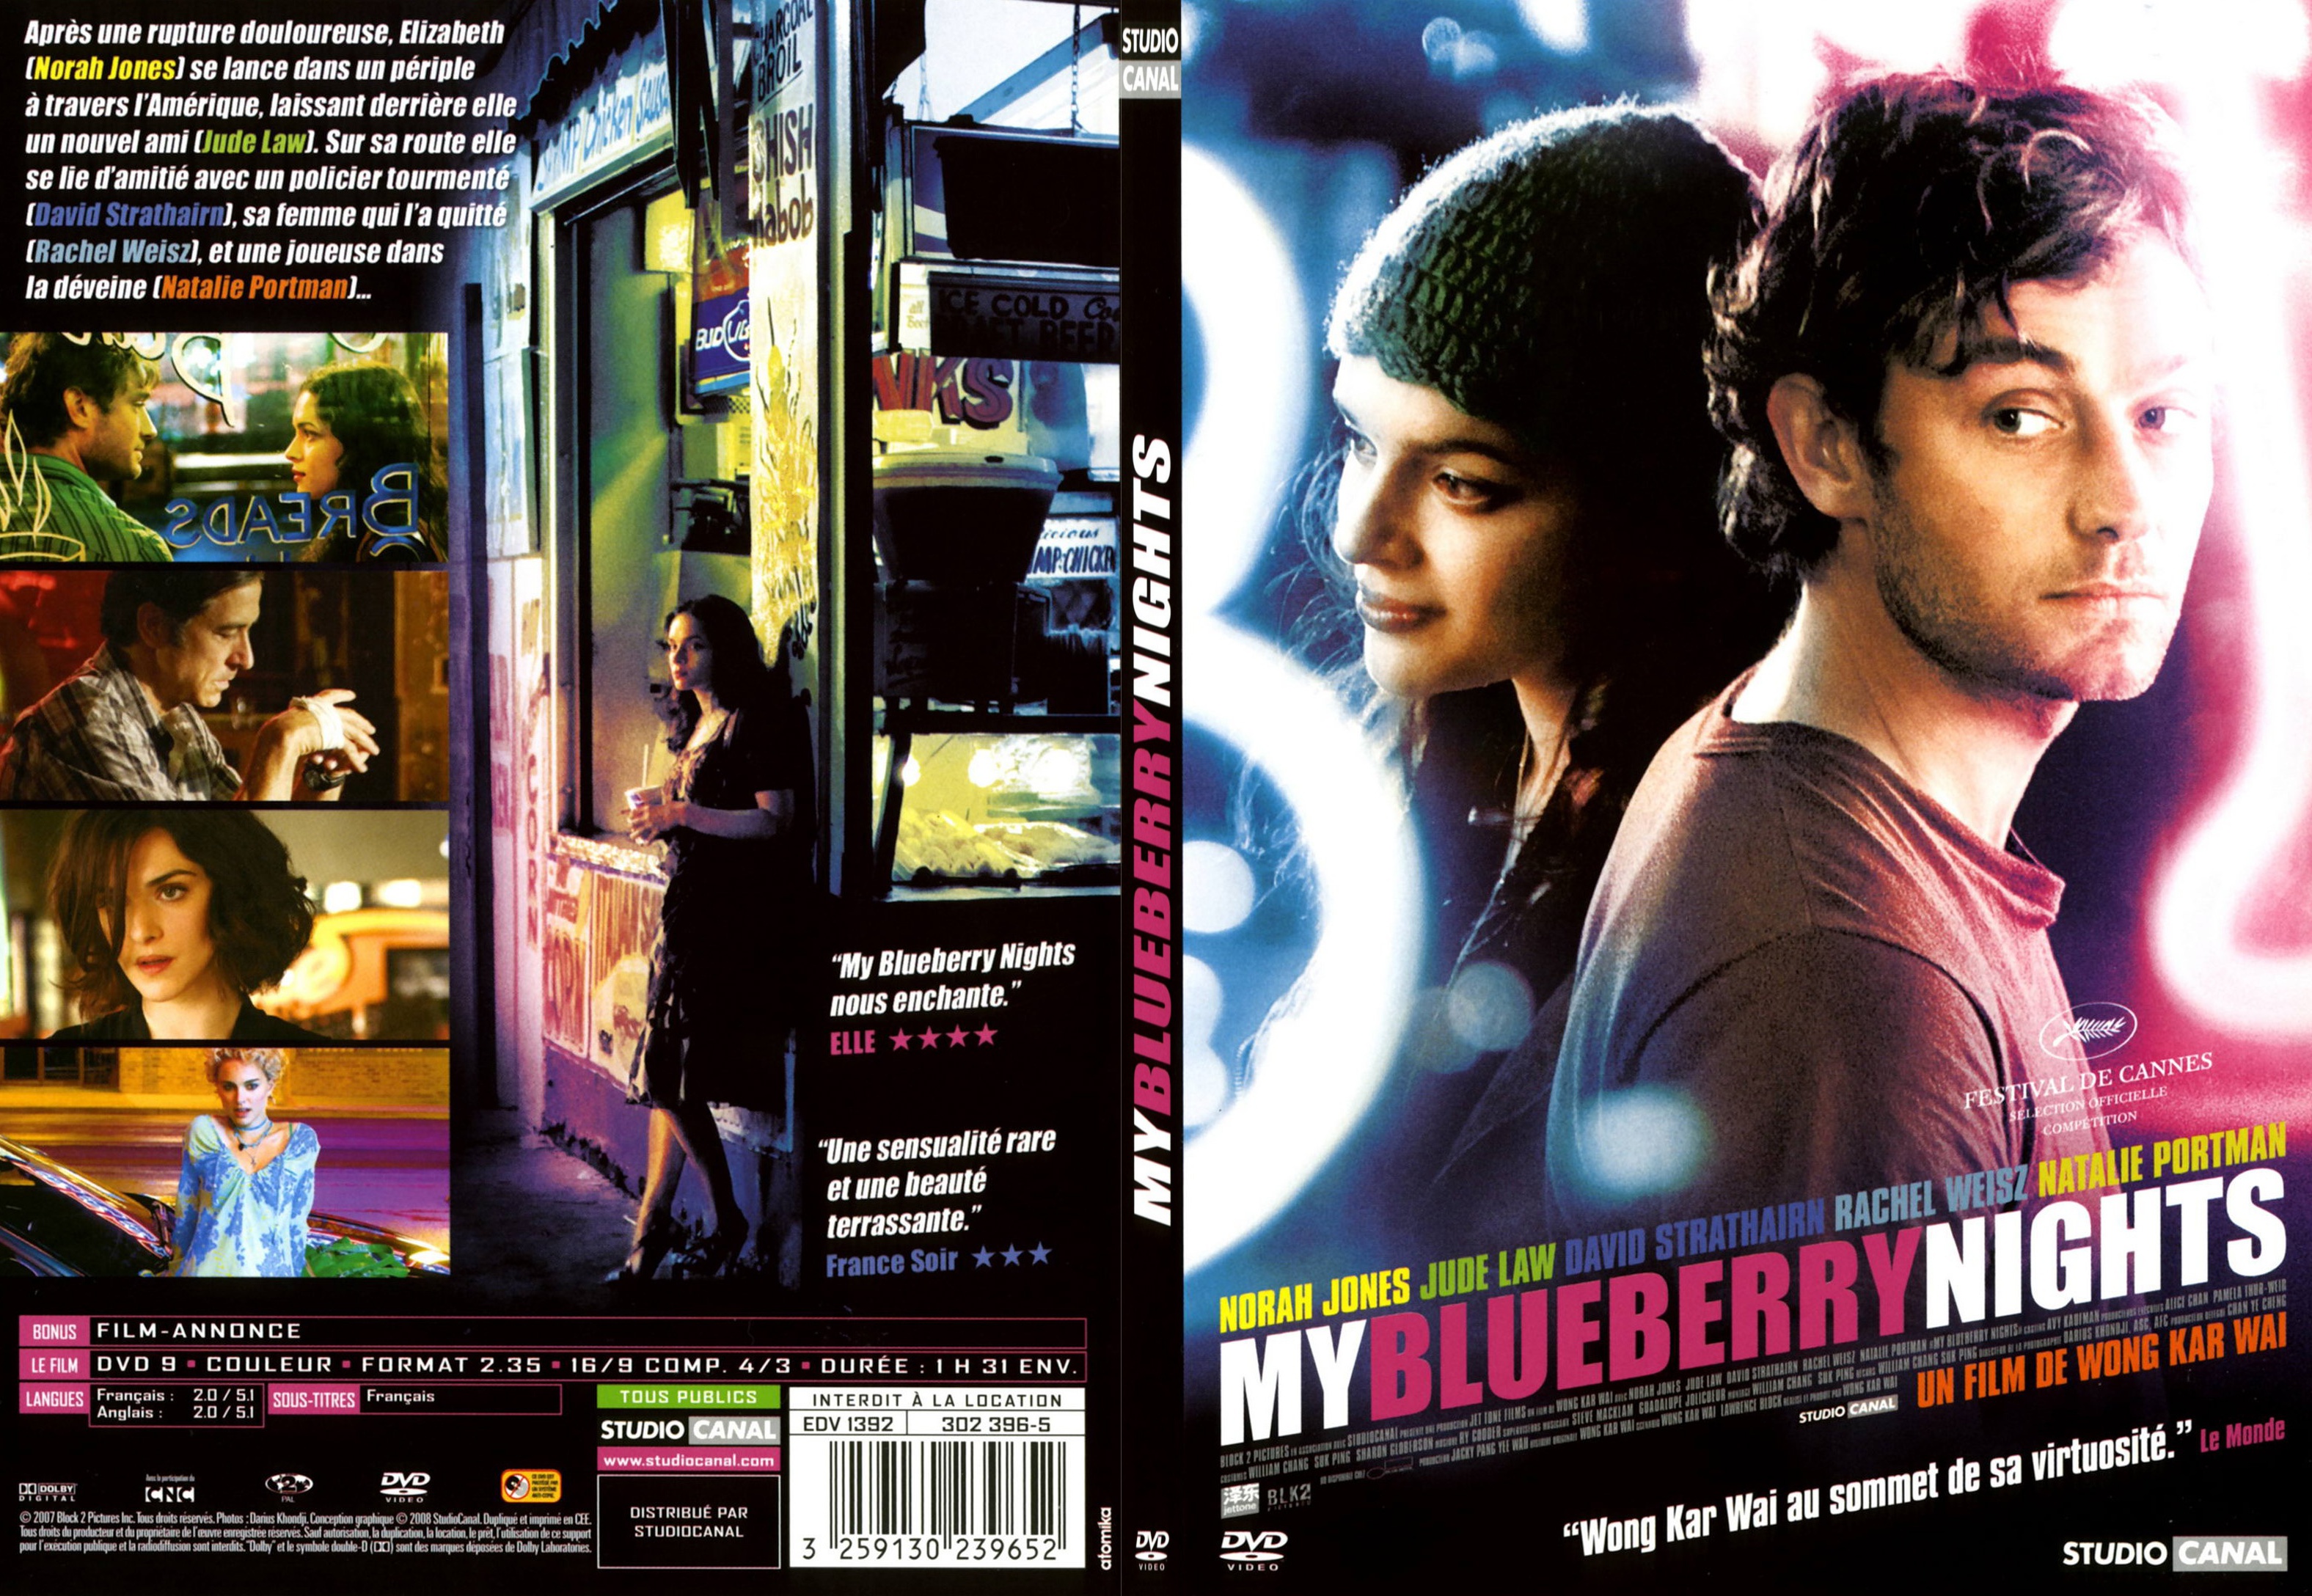 Jaquette DVD My blueberry nights - SLIM